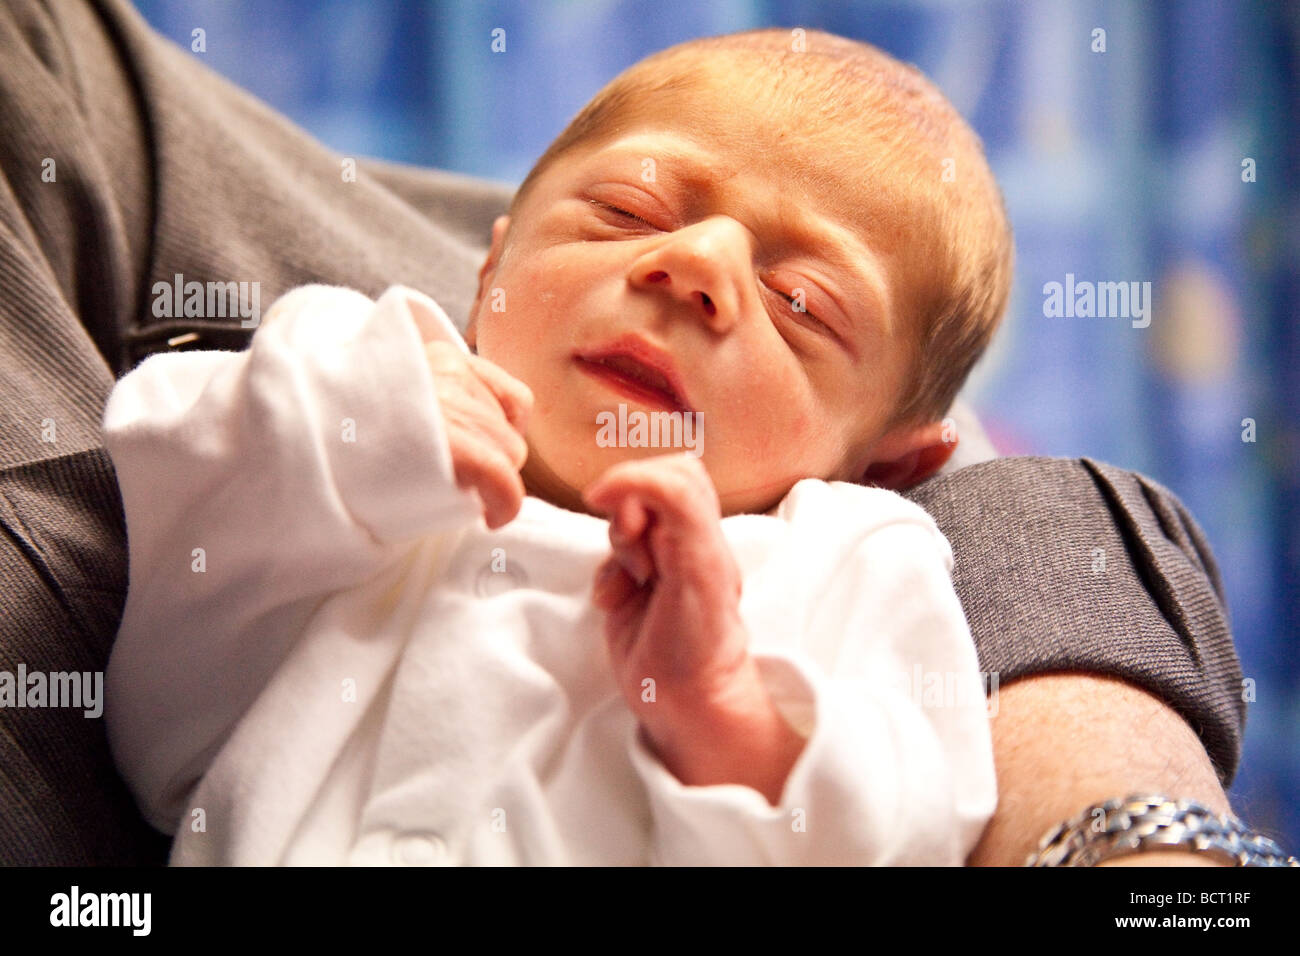 A newborn baby boy (7 days old) being cuddled, London, England. Stock Photo